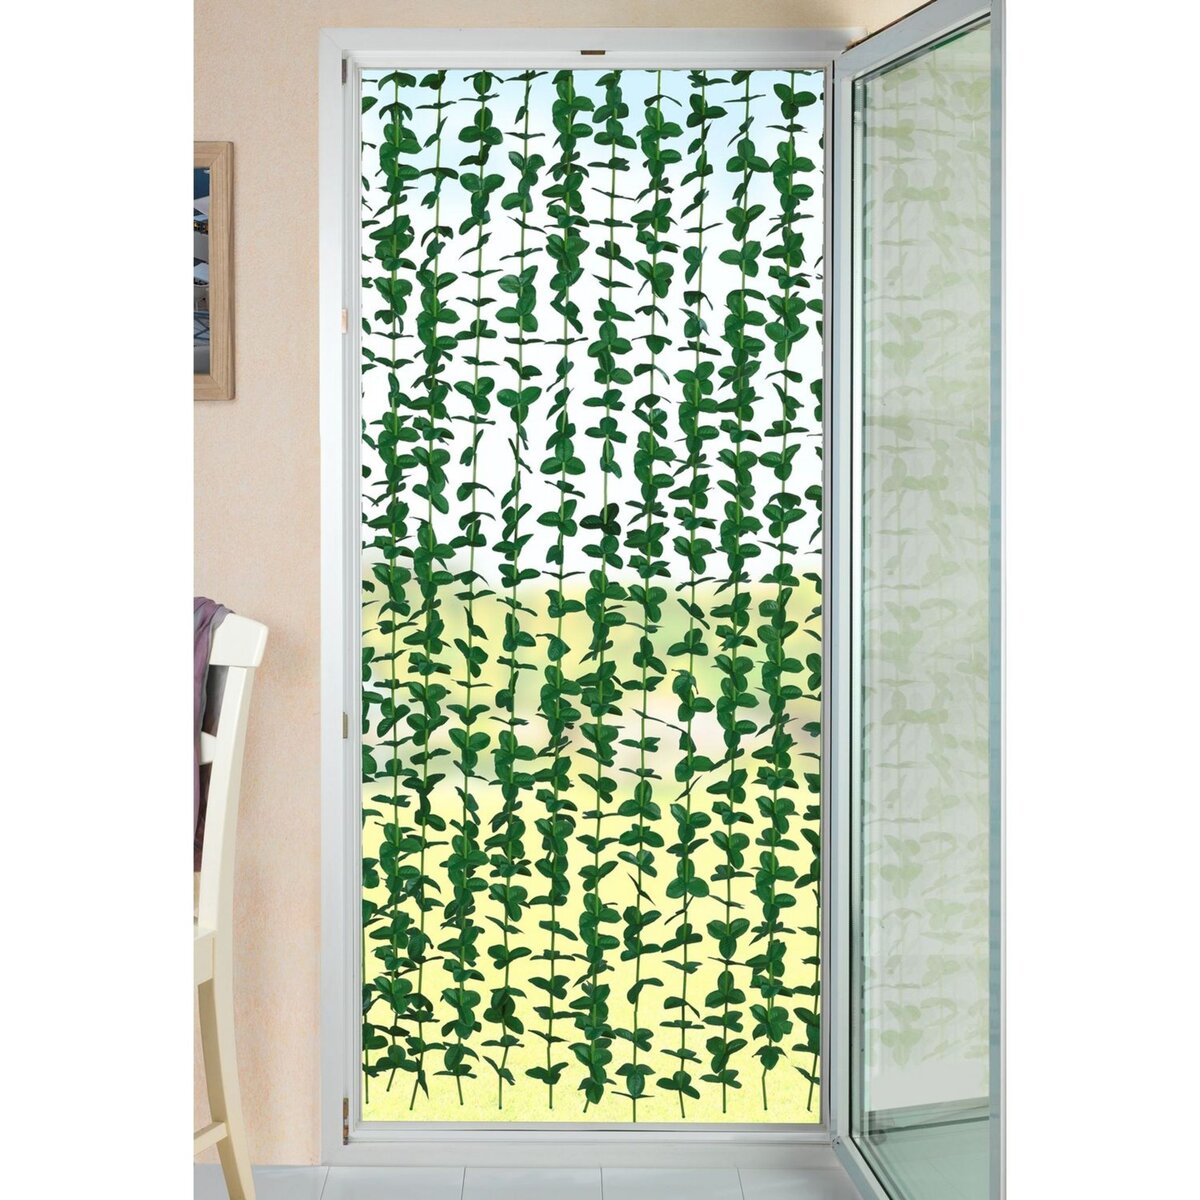 Wenko Rideau de porte en plante verte Liane - L. 90 x H. 190 cm - Vert